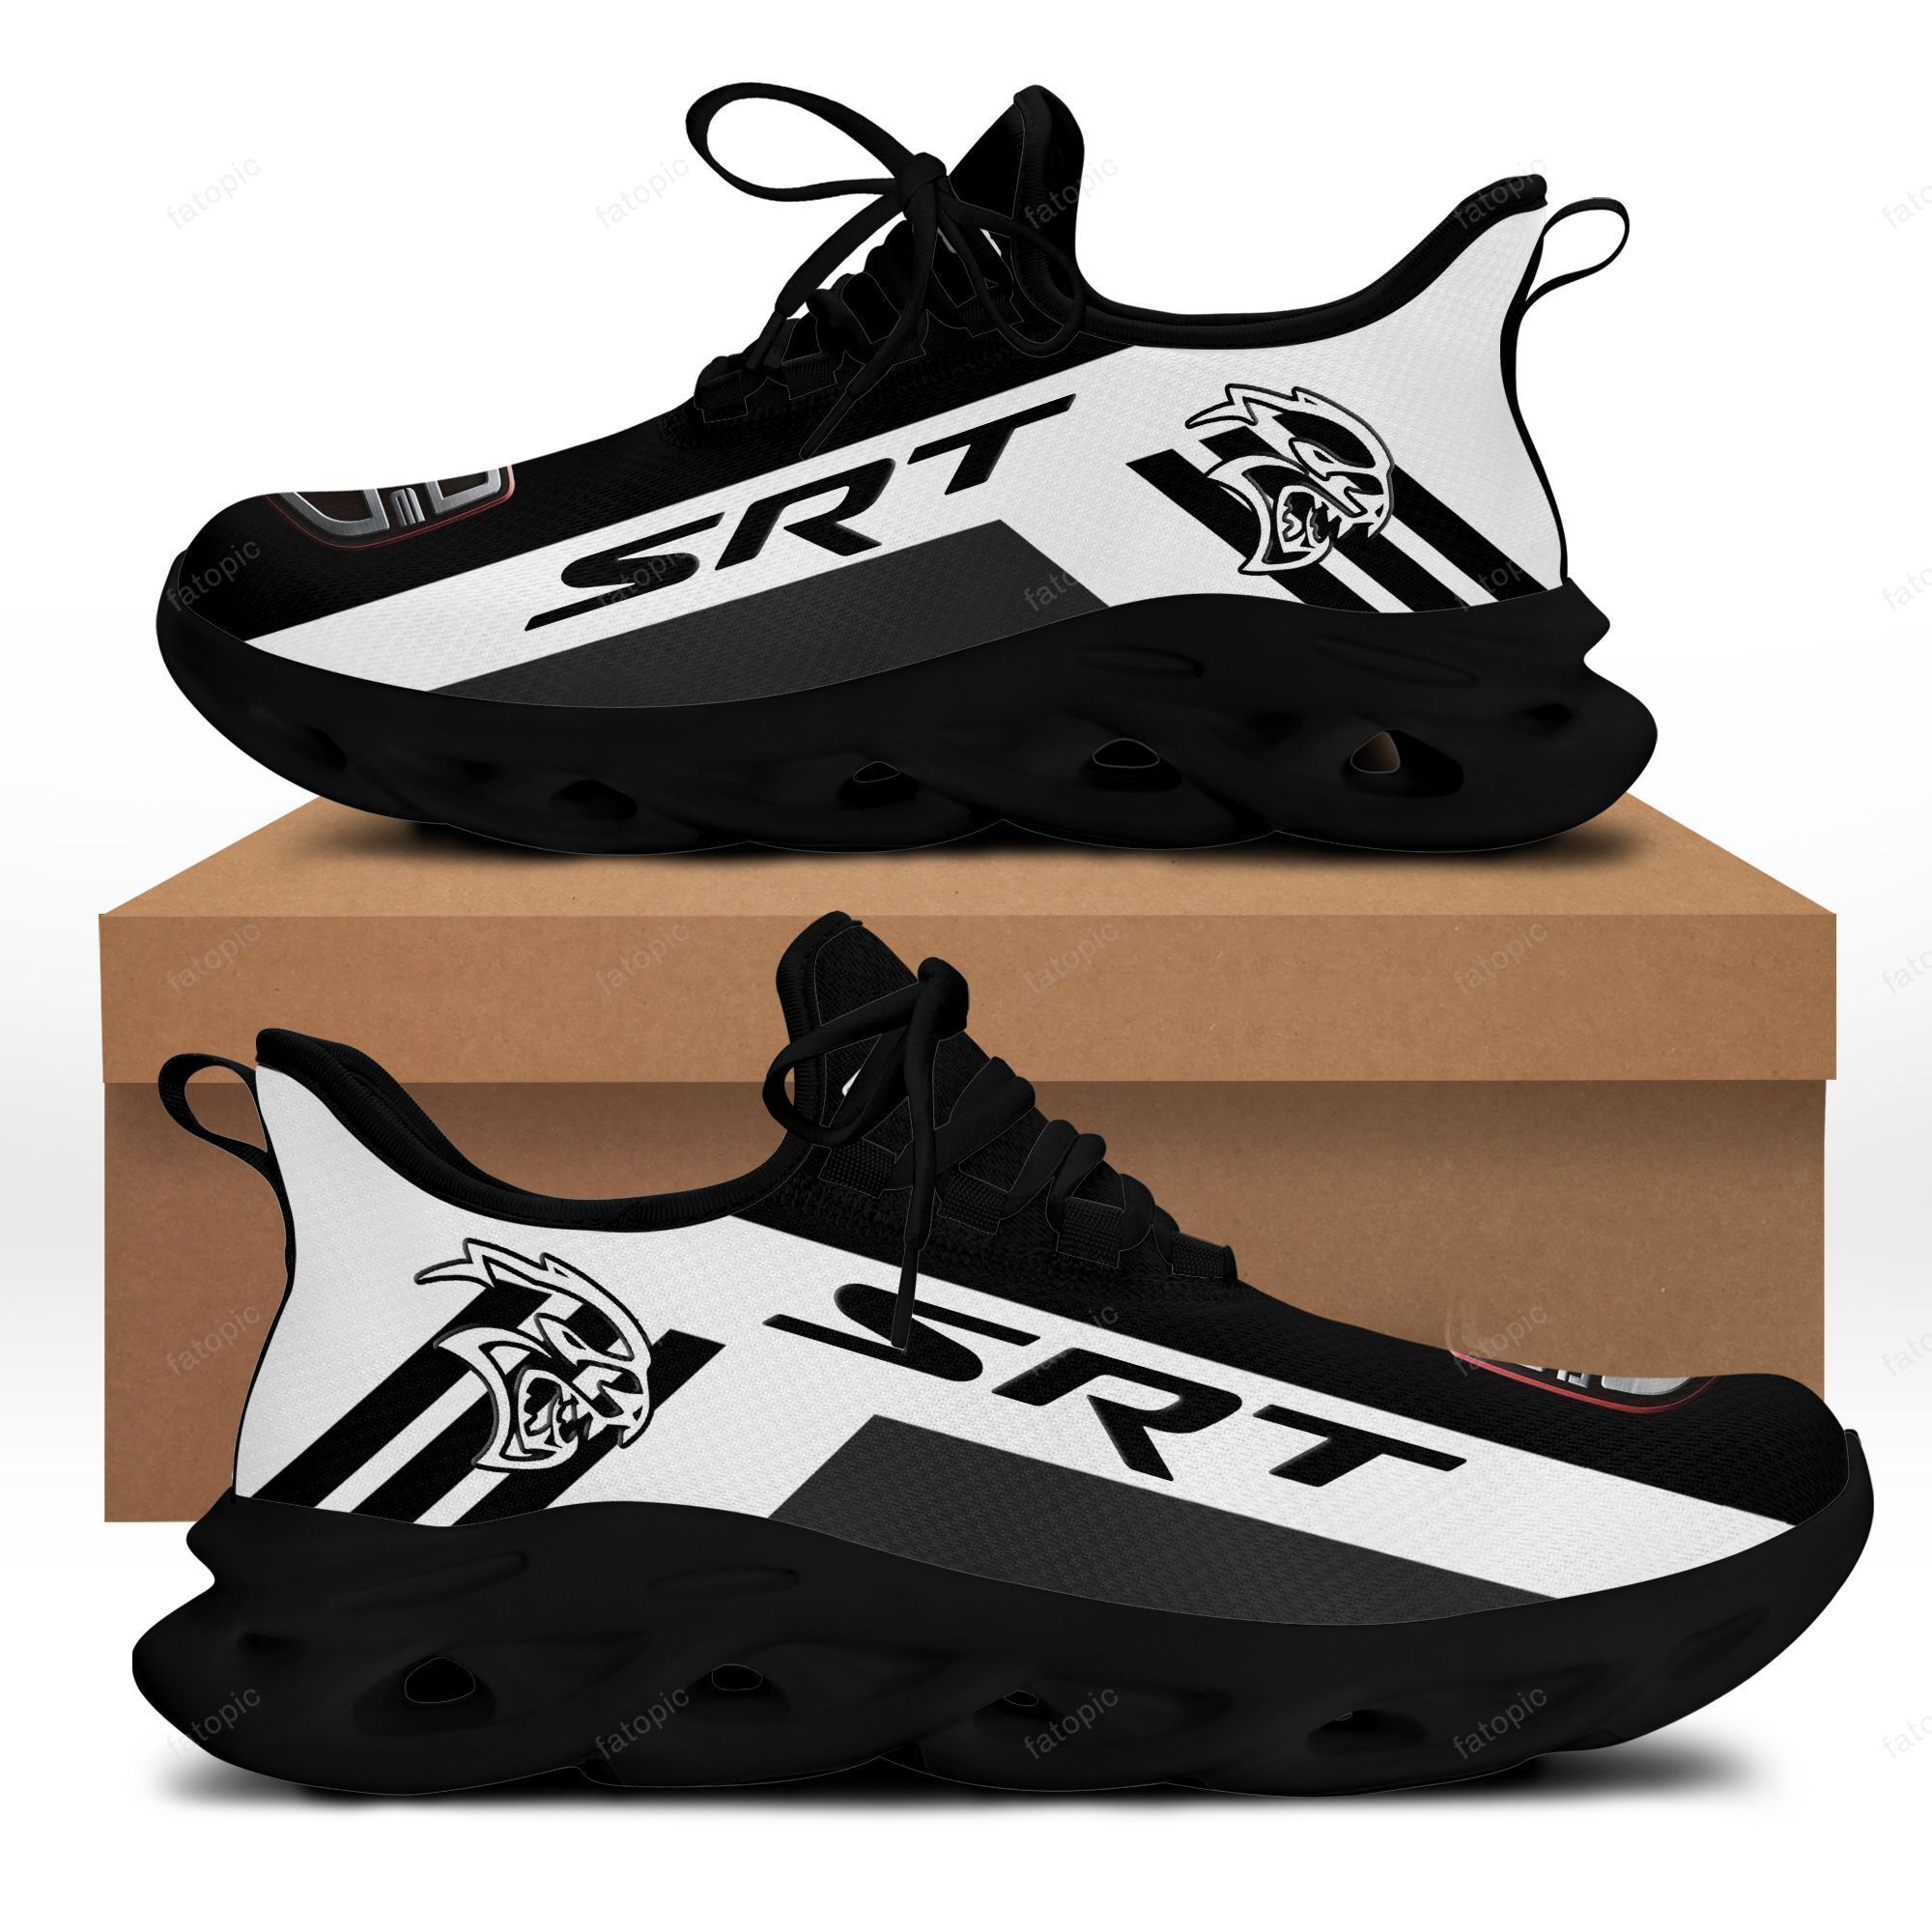 DODGE SRT NCT-NH BS Running Shoes Ver 2 (Black) – Fashionspicex Shop